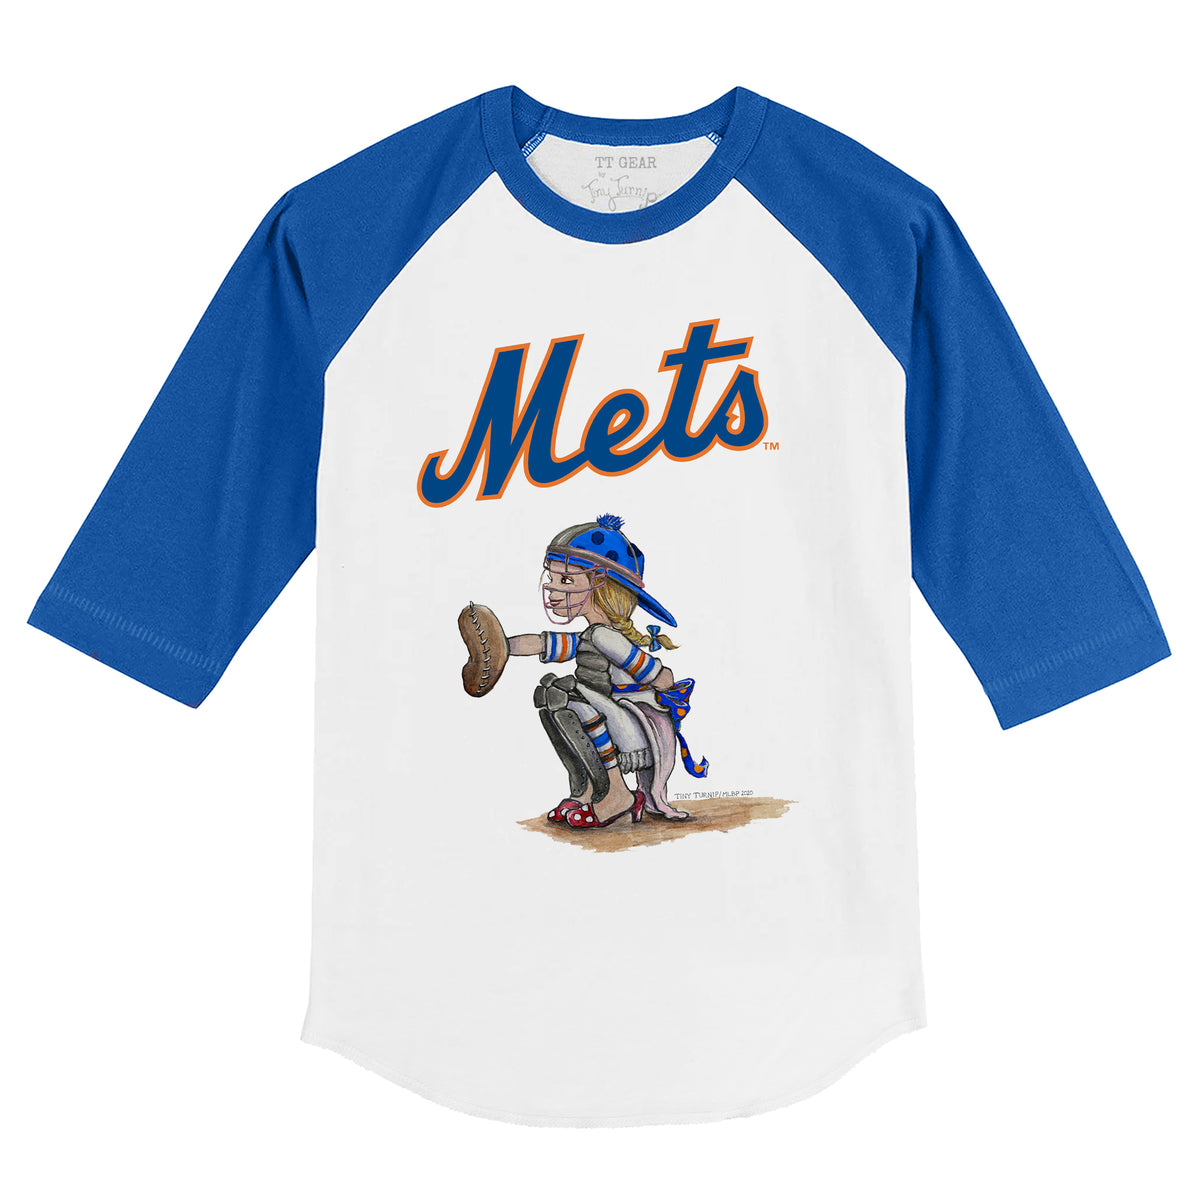 New York Mets Kate the Catcher 3/4 Royal Blue Sleeve Raglan